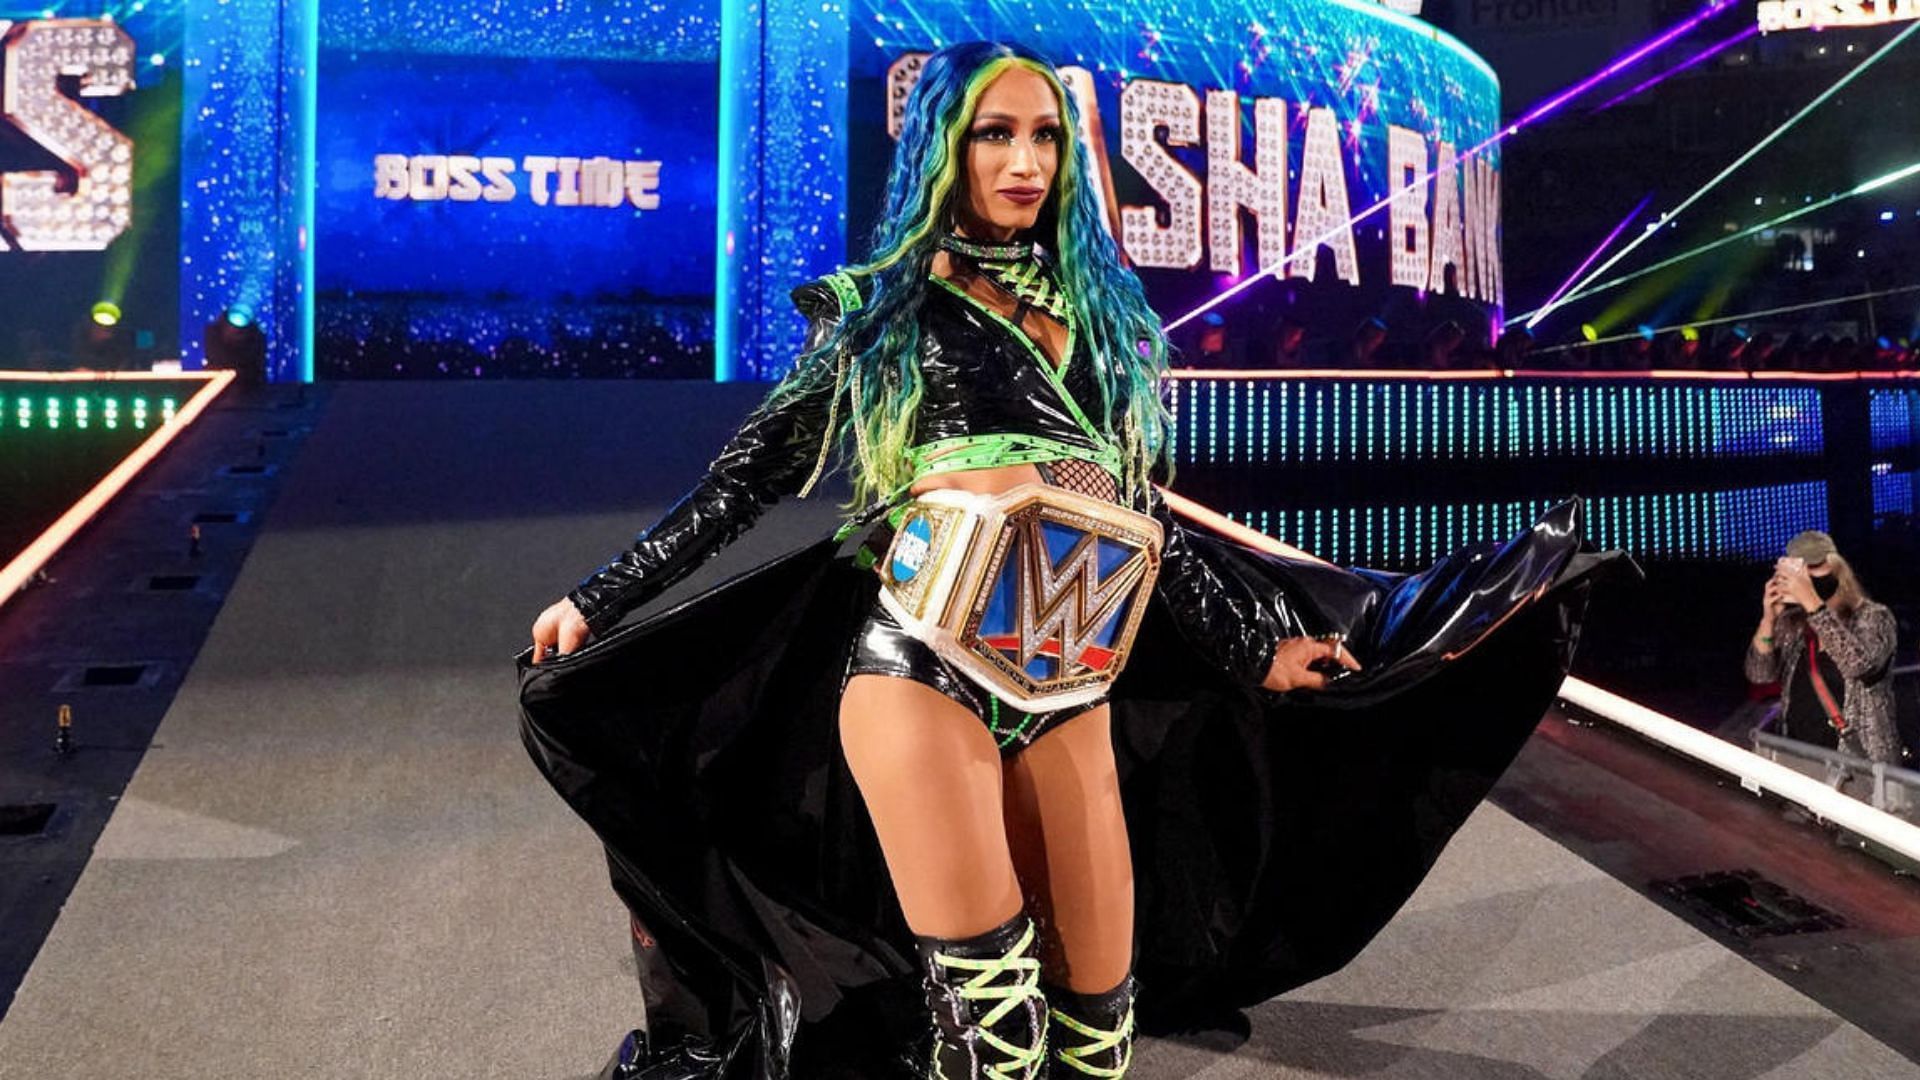 Sasha Banks is a former WWE SmackDown Women